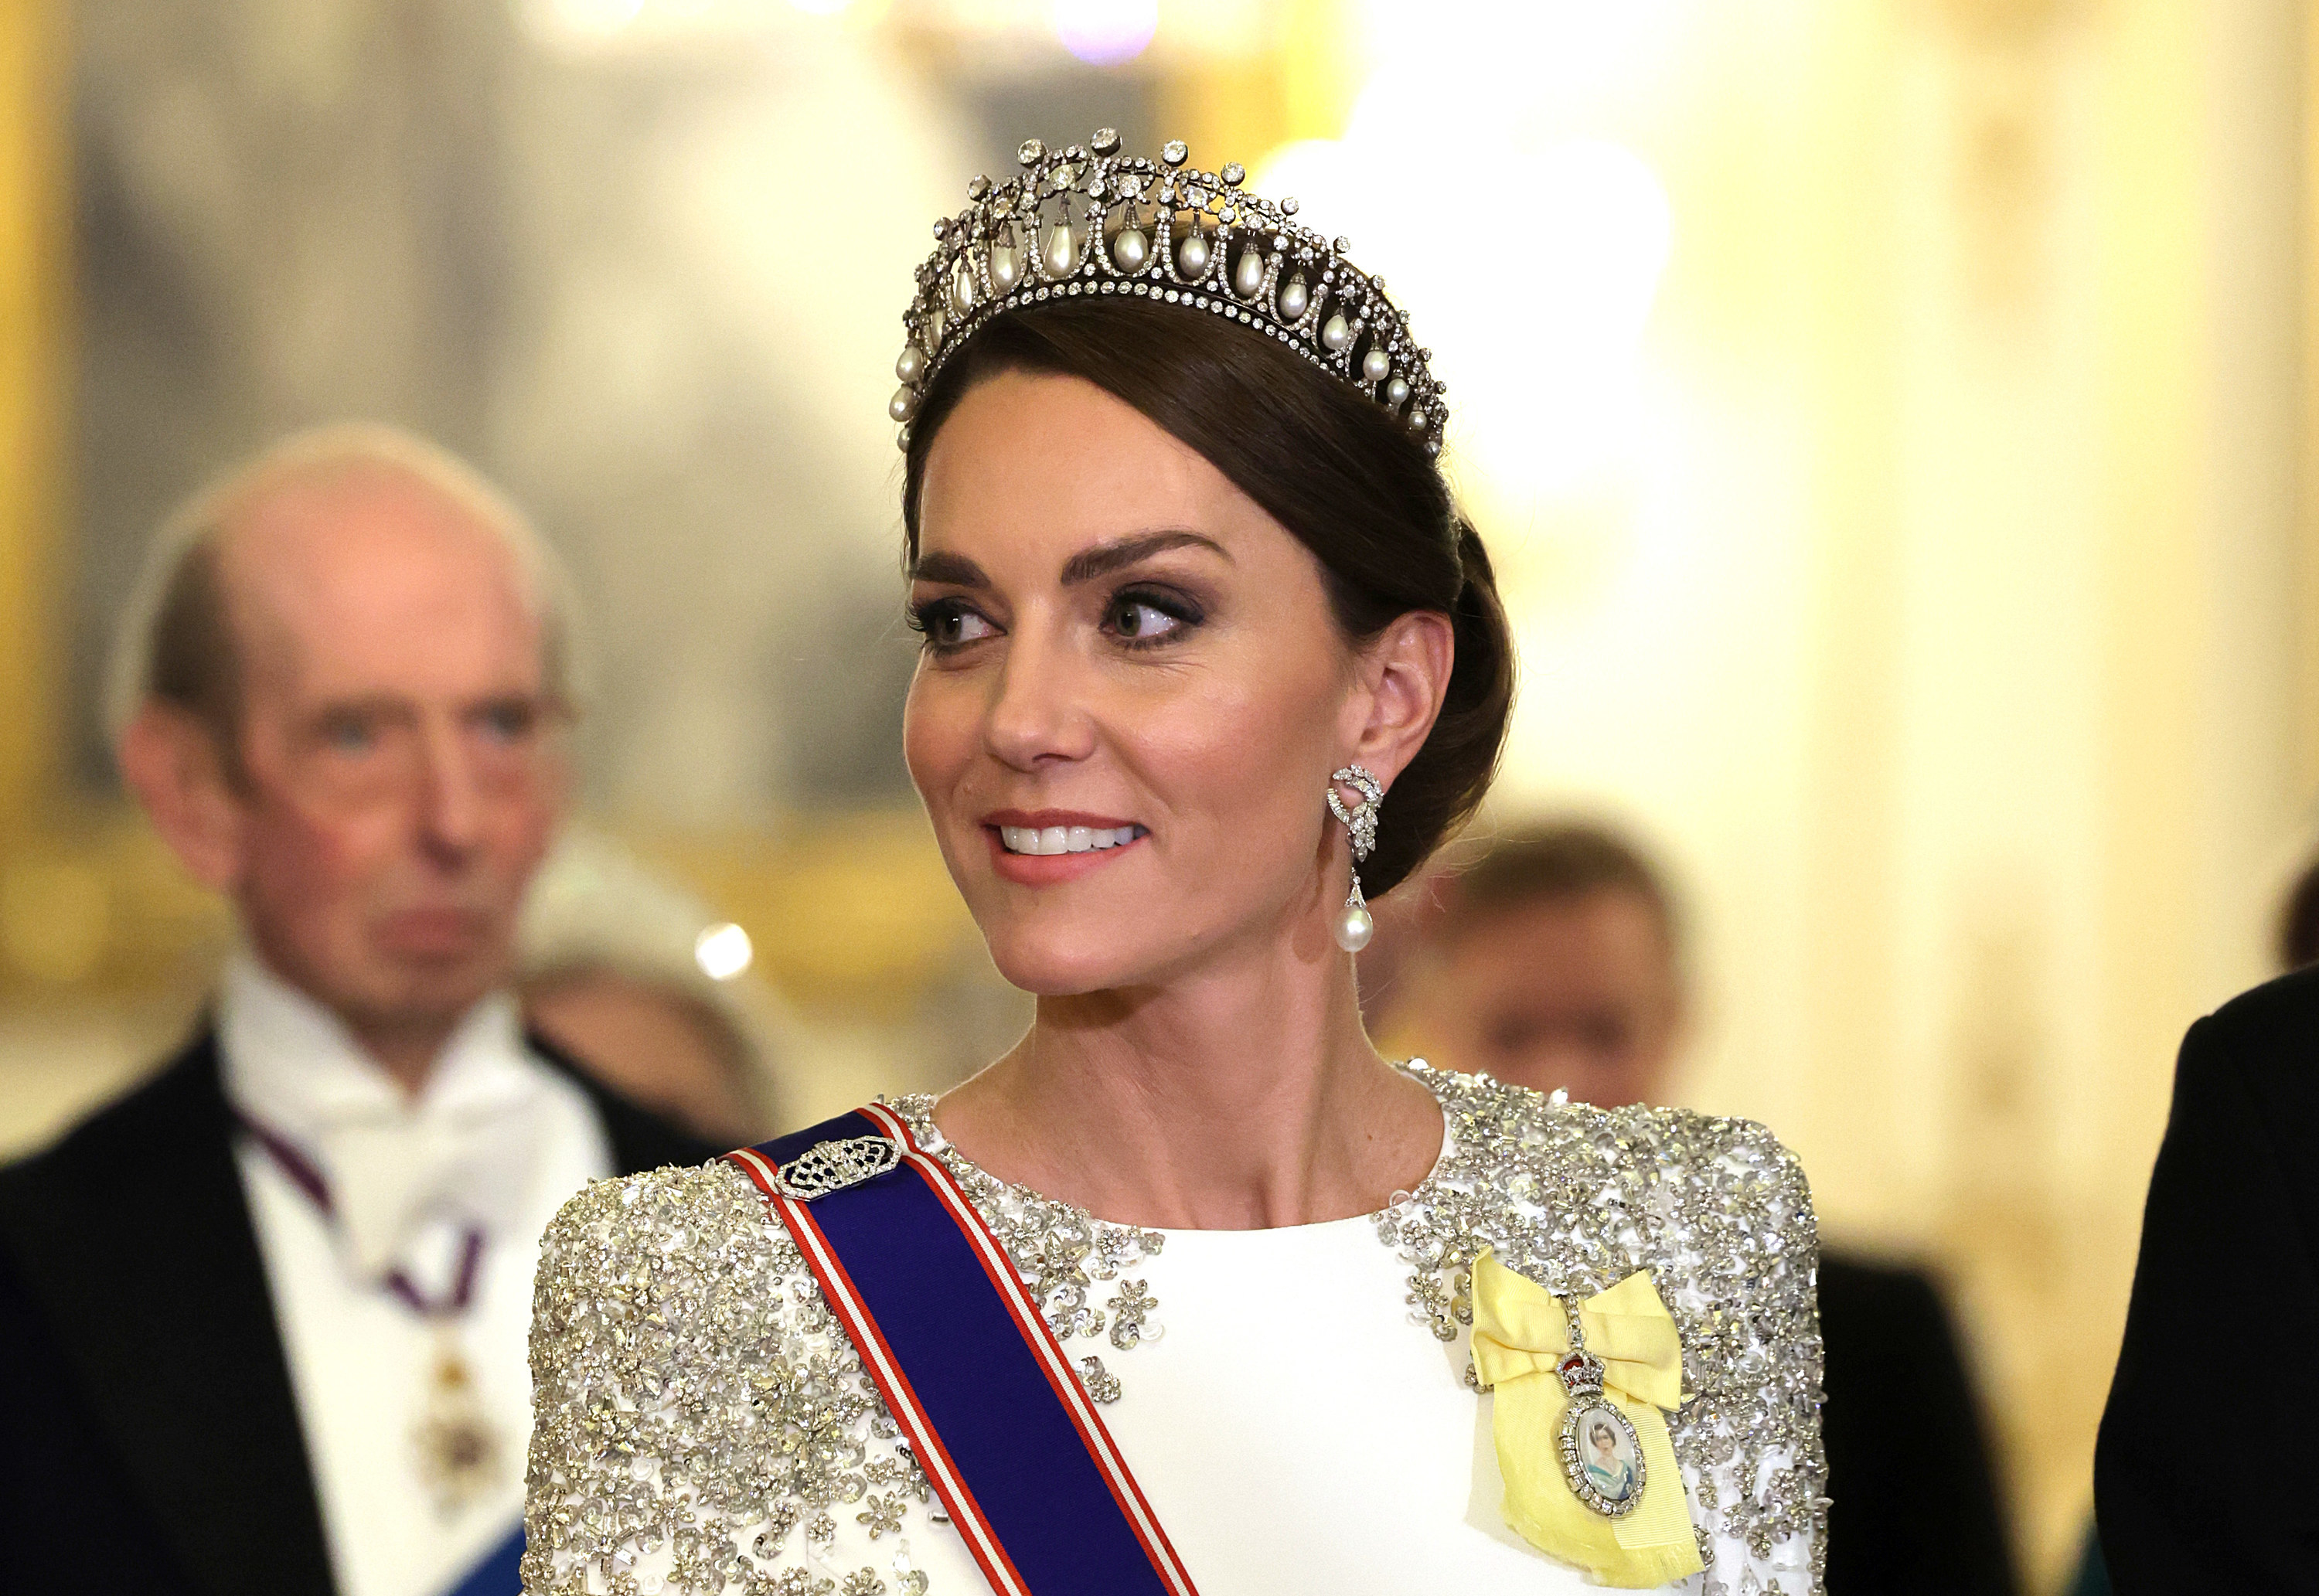 A closeup of kate at a royal event wearing a tiara